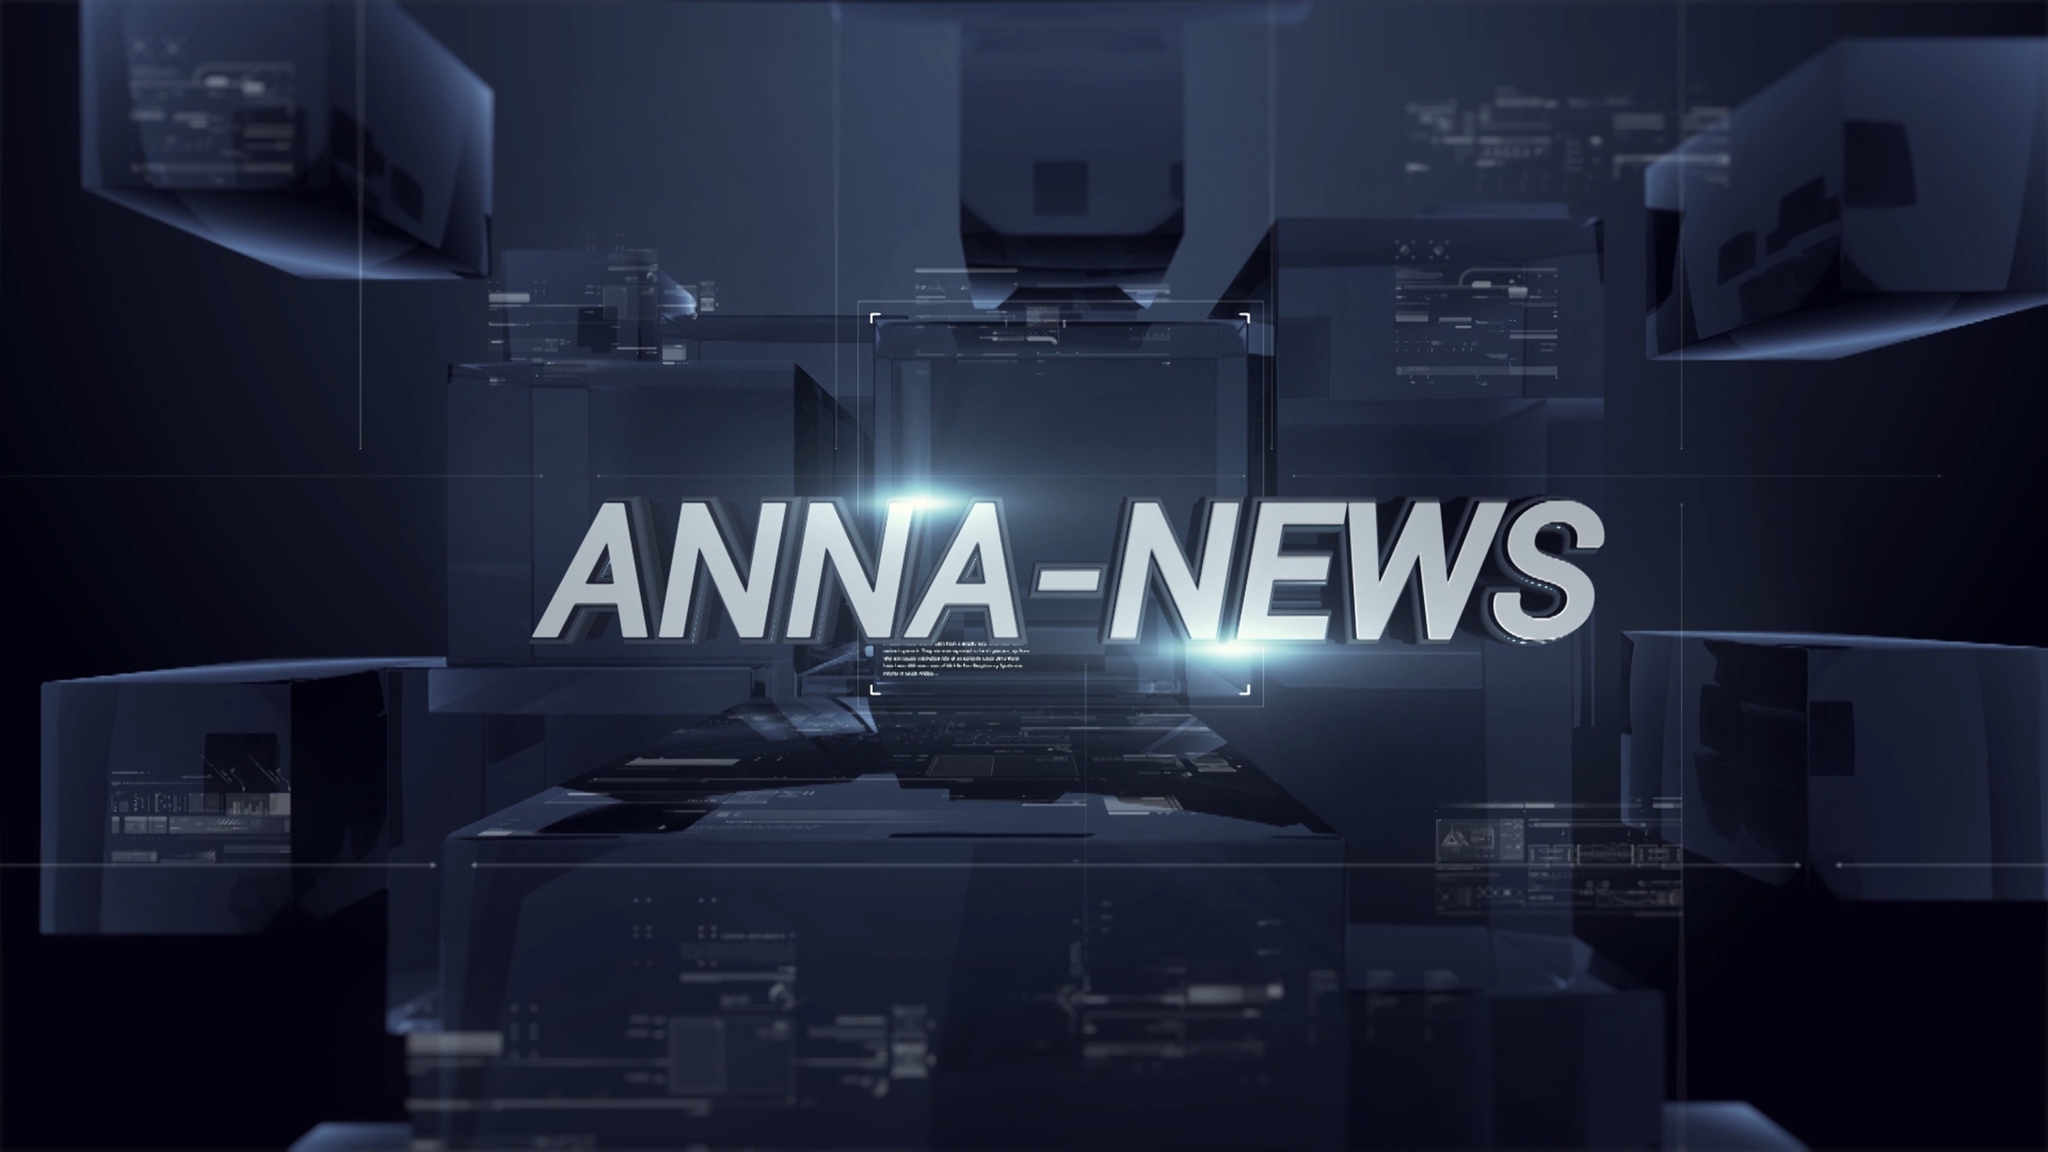 ANNAprograms's Channel - VIARmedia